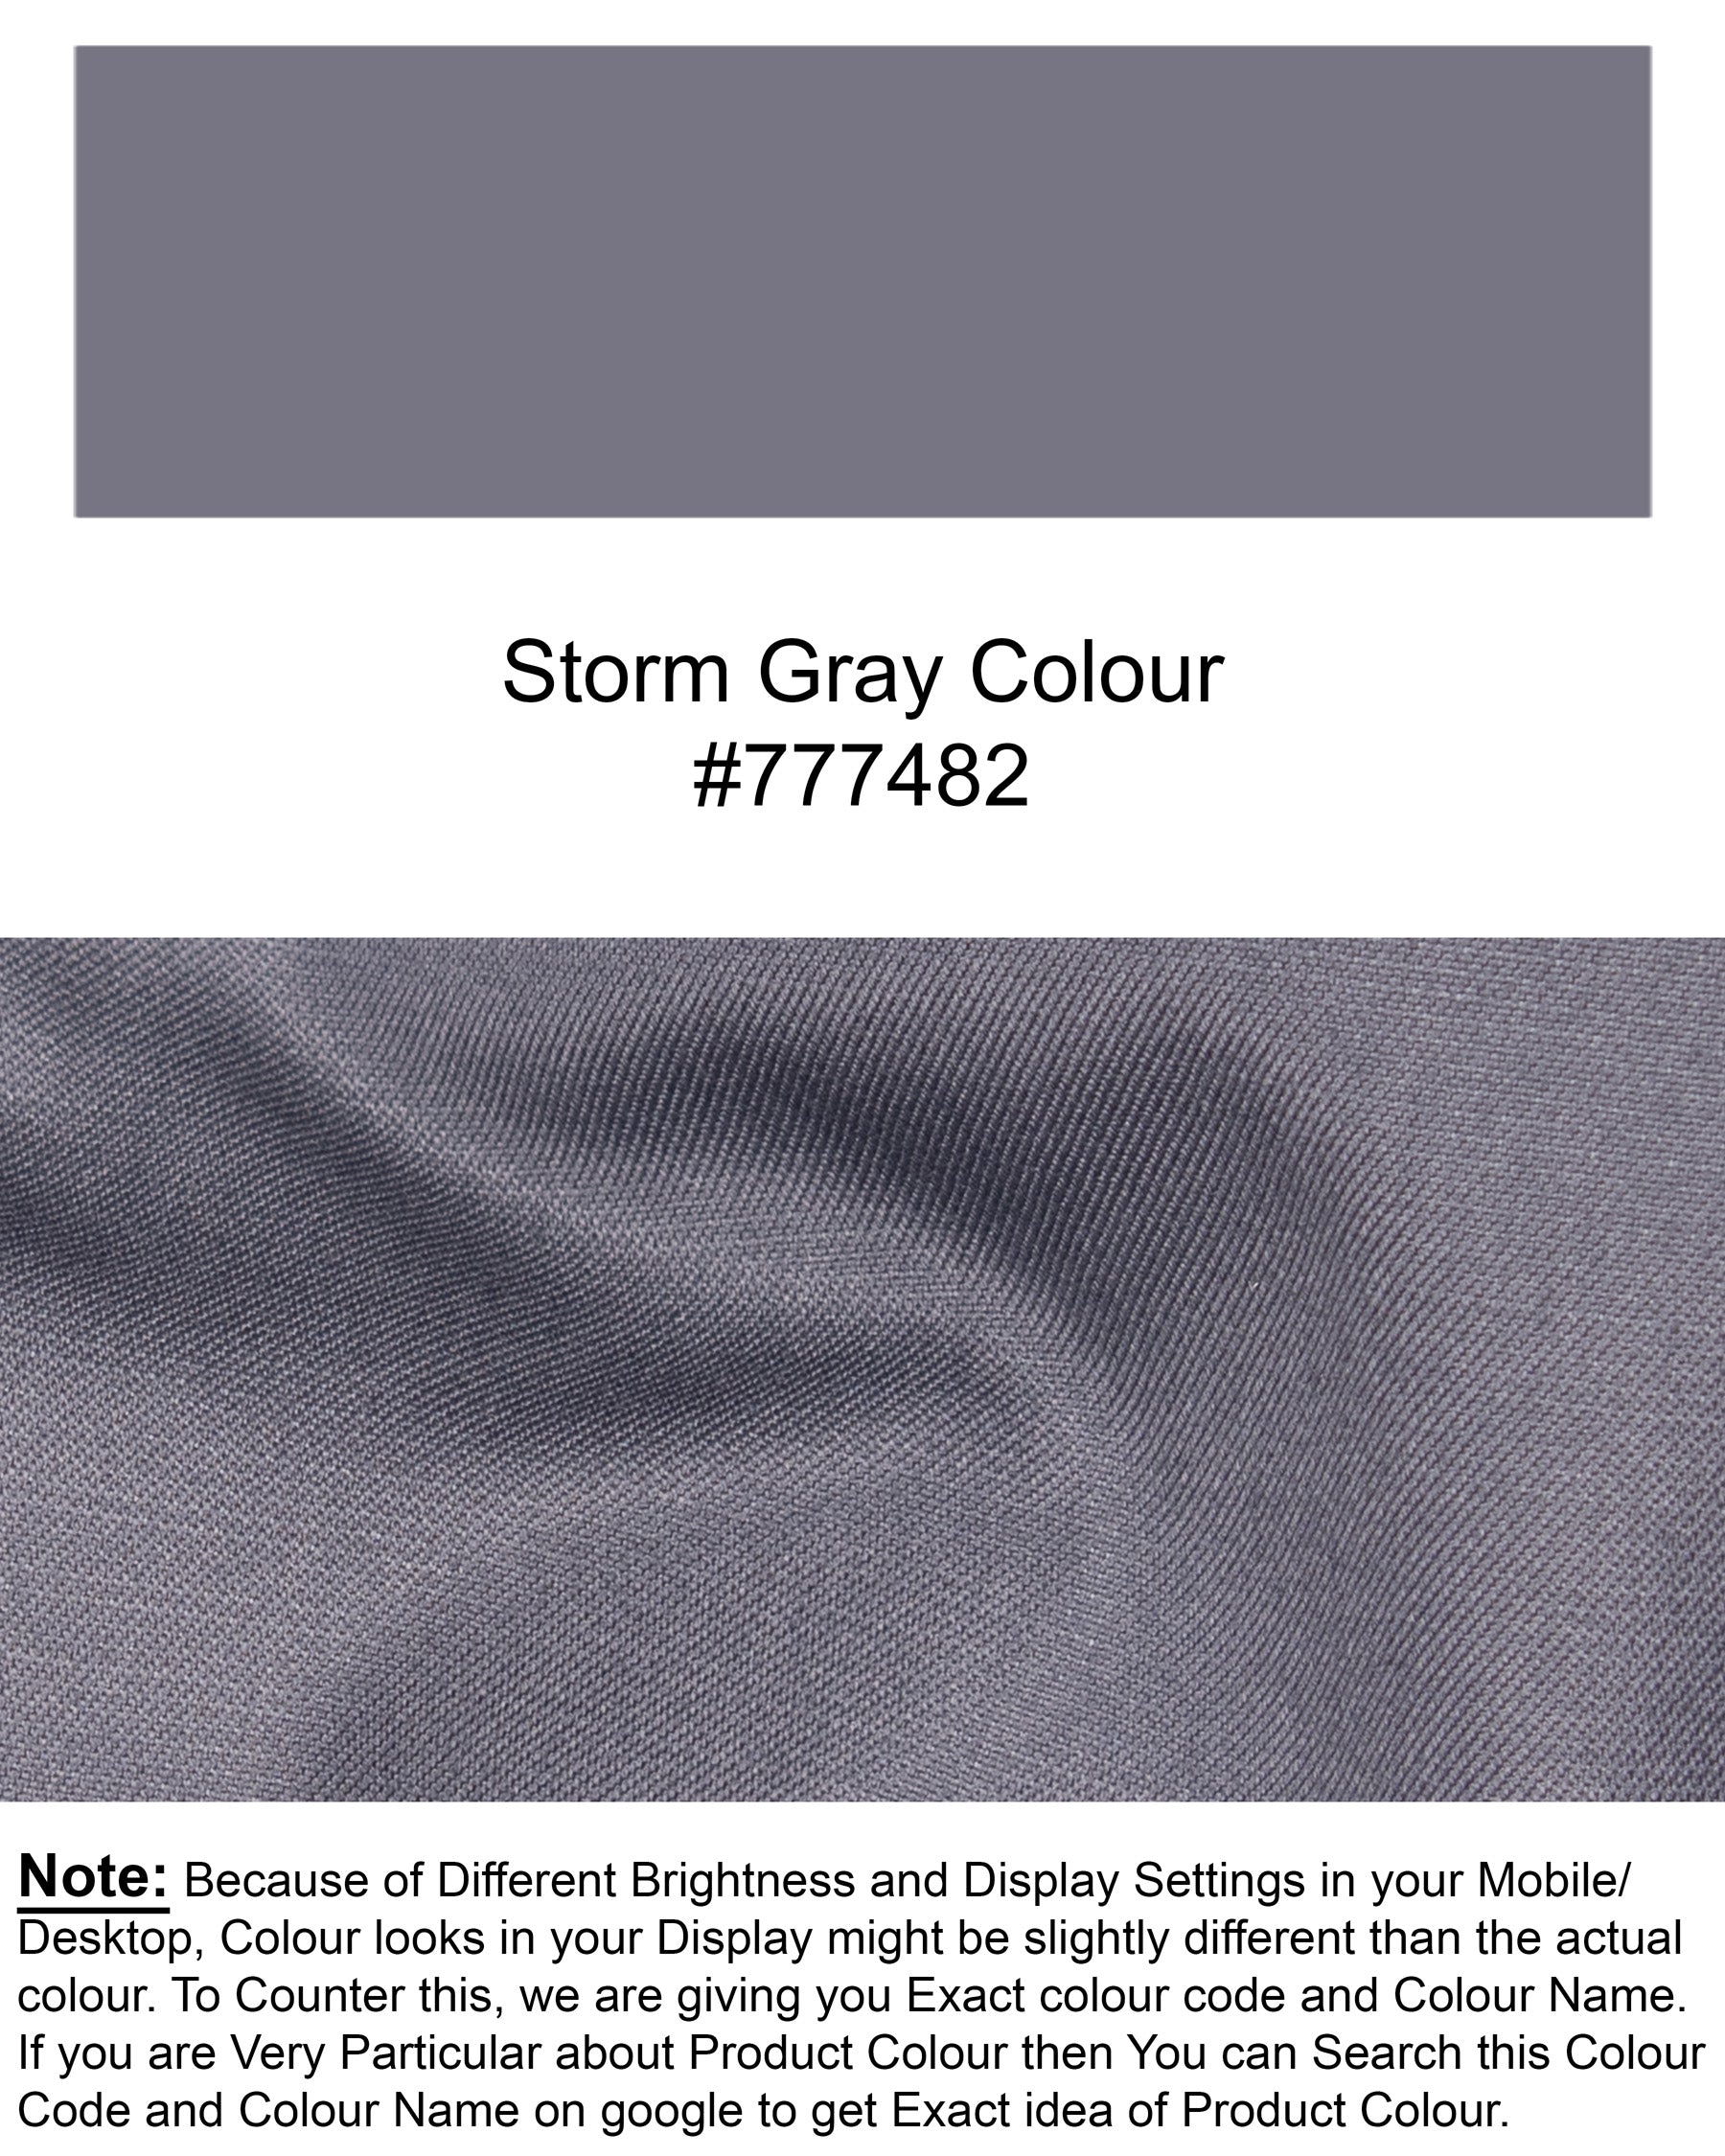 Storm Gray Wool Rich Suit ST1342-SB-36, ST1342-SB-38, ST1342-SB-40, ST1342-SB-42, ST1342-SB-44, ST1342-SB-46, ST1342-SB-48, ST1342-SB-50, ST1342-SB-52, ST1342-SB-54, ST1342-SB-56, ST1342-SB-58, ST1342-SB-60